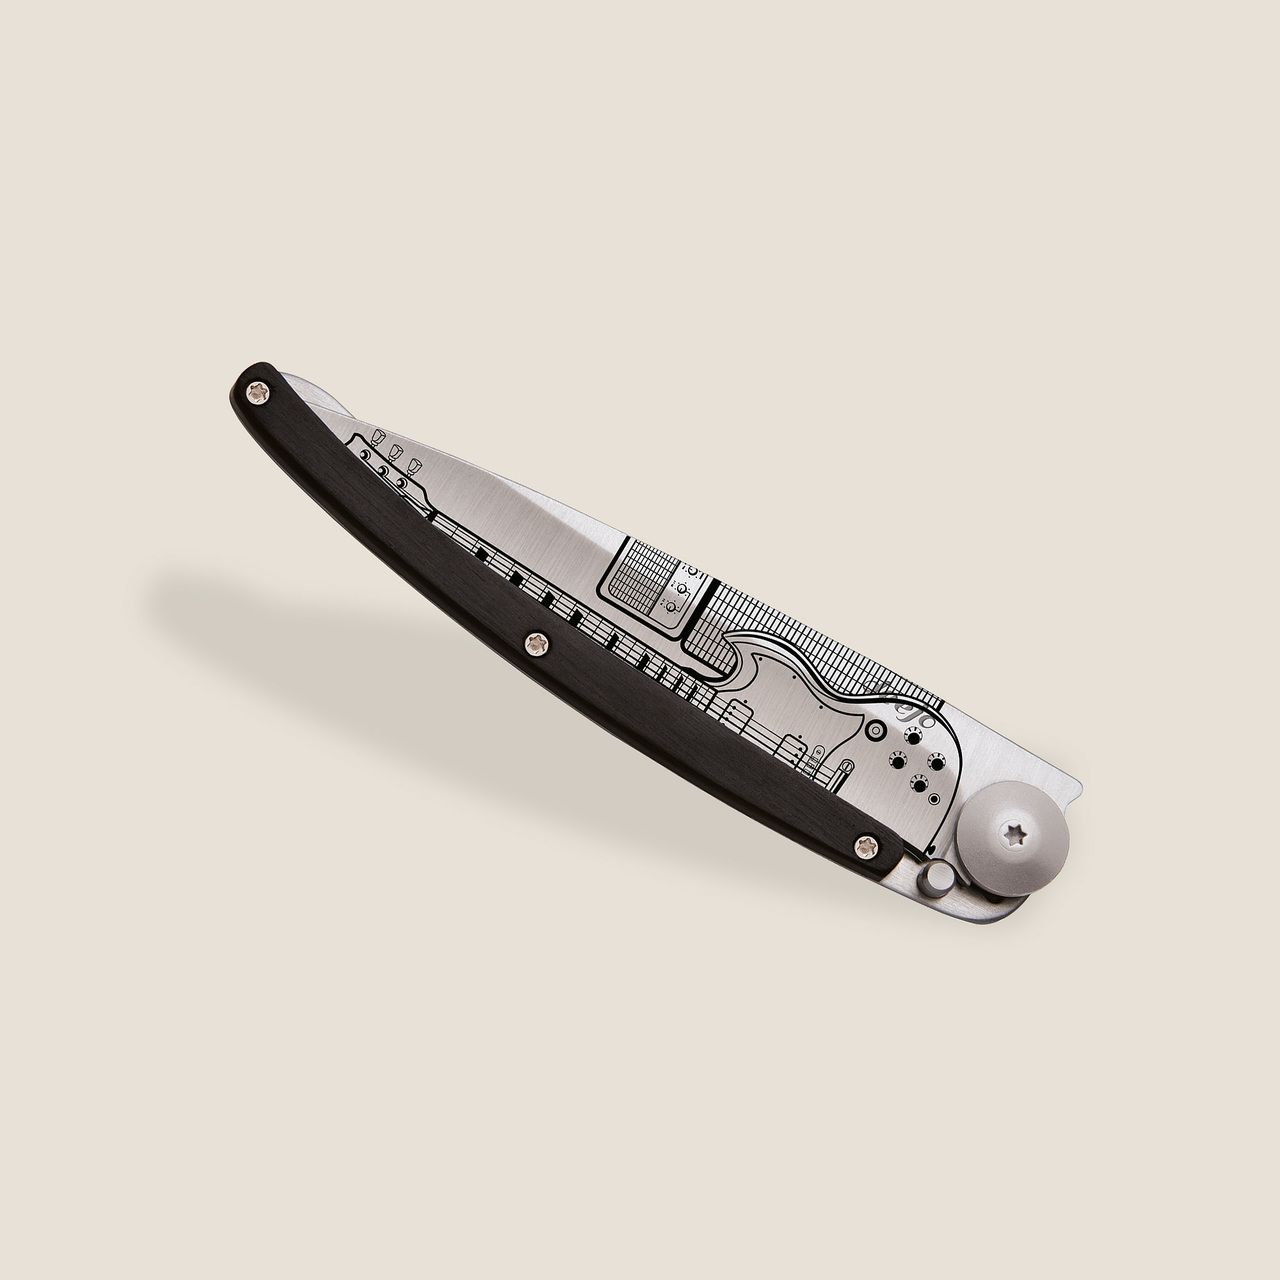 J&O knife sharpener - Latest version of the J&O knife sharpening